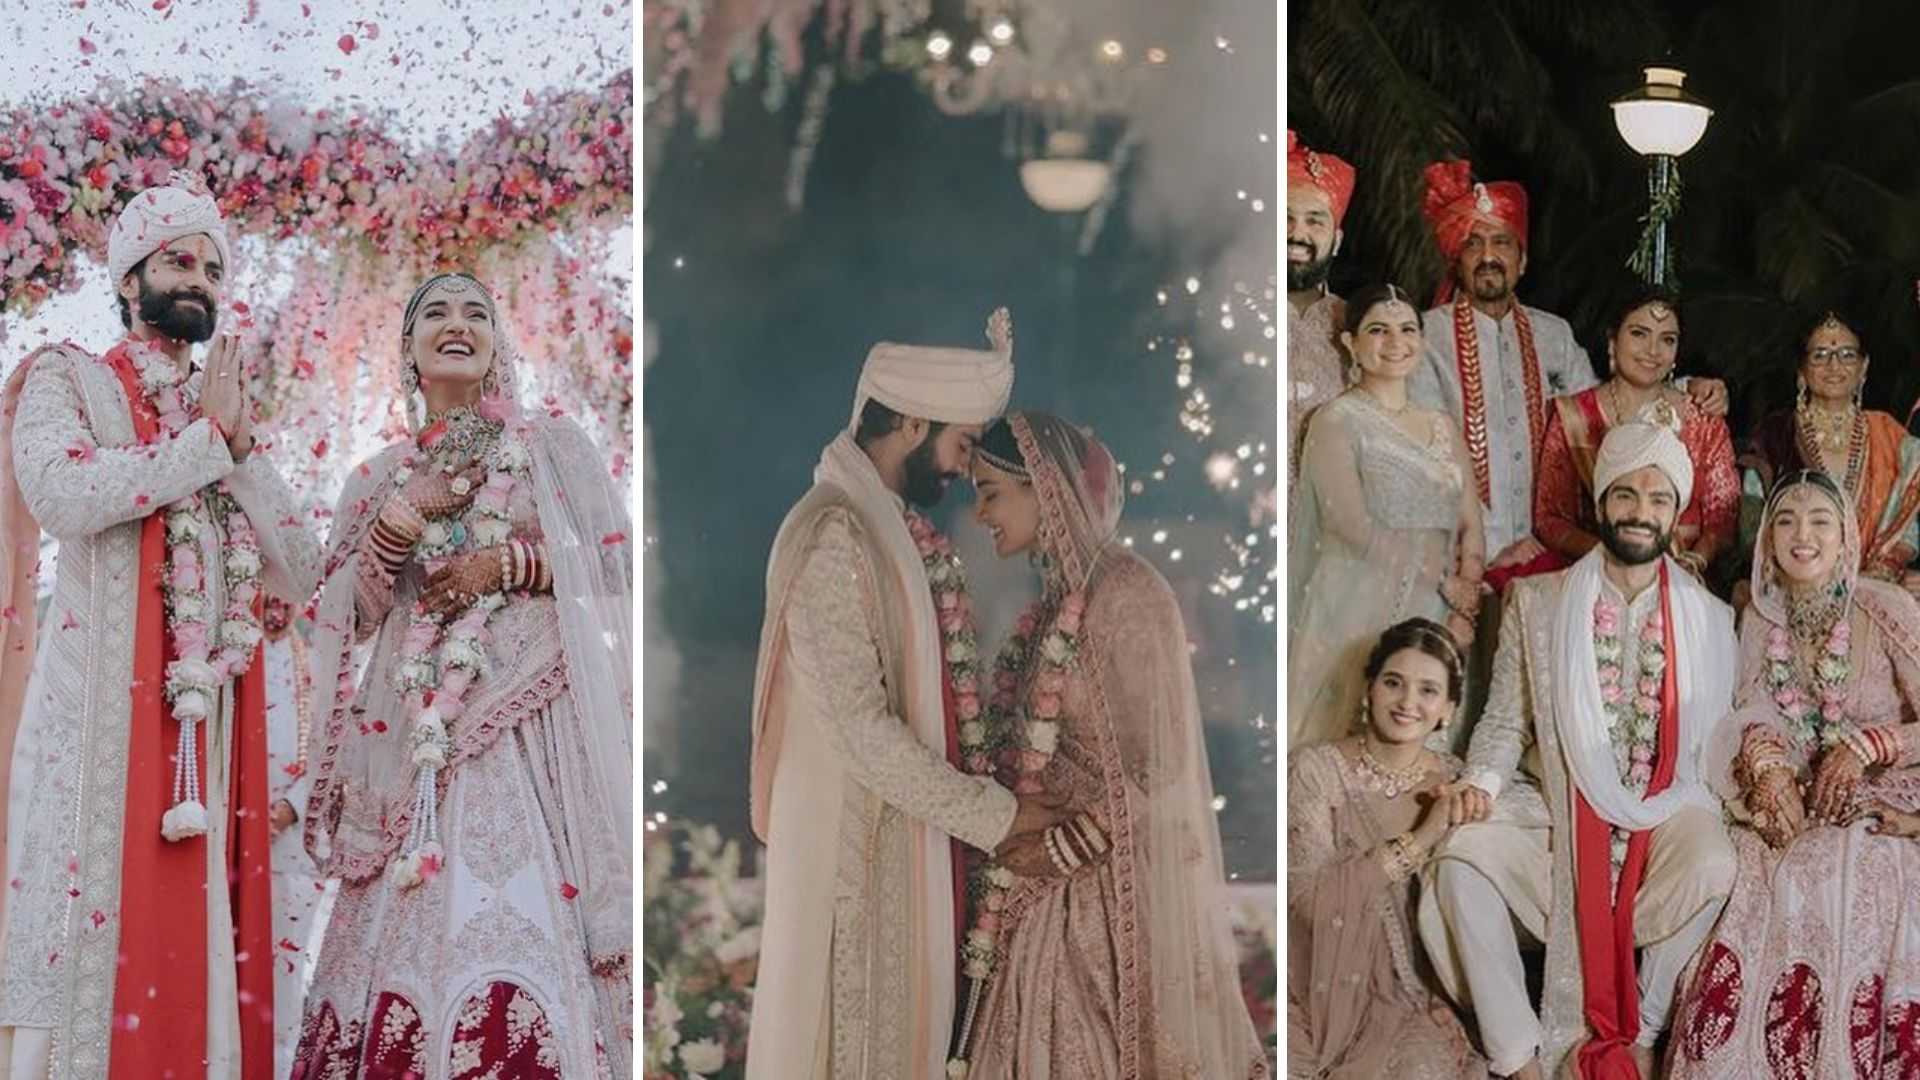 Dancer-actress Mukti Mohan gets married to Kunal Thakur of Animal fame, couple drop dreamy wedding pics